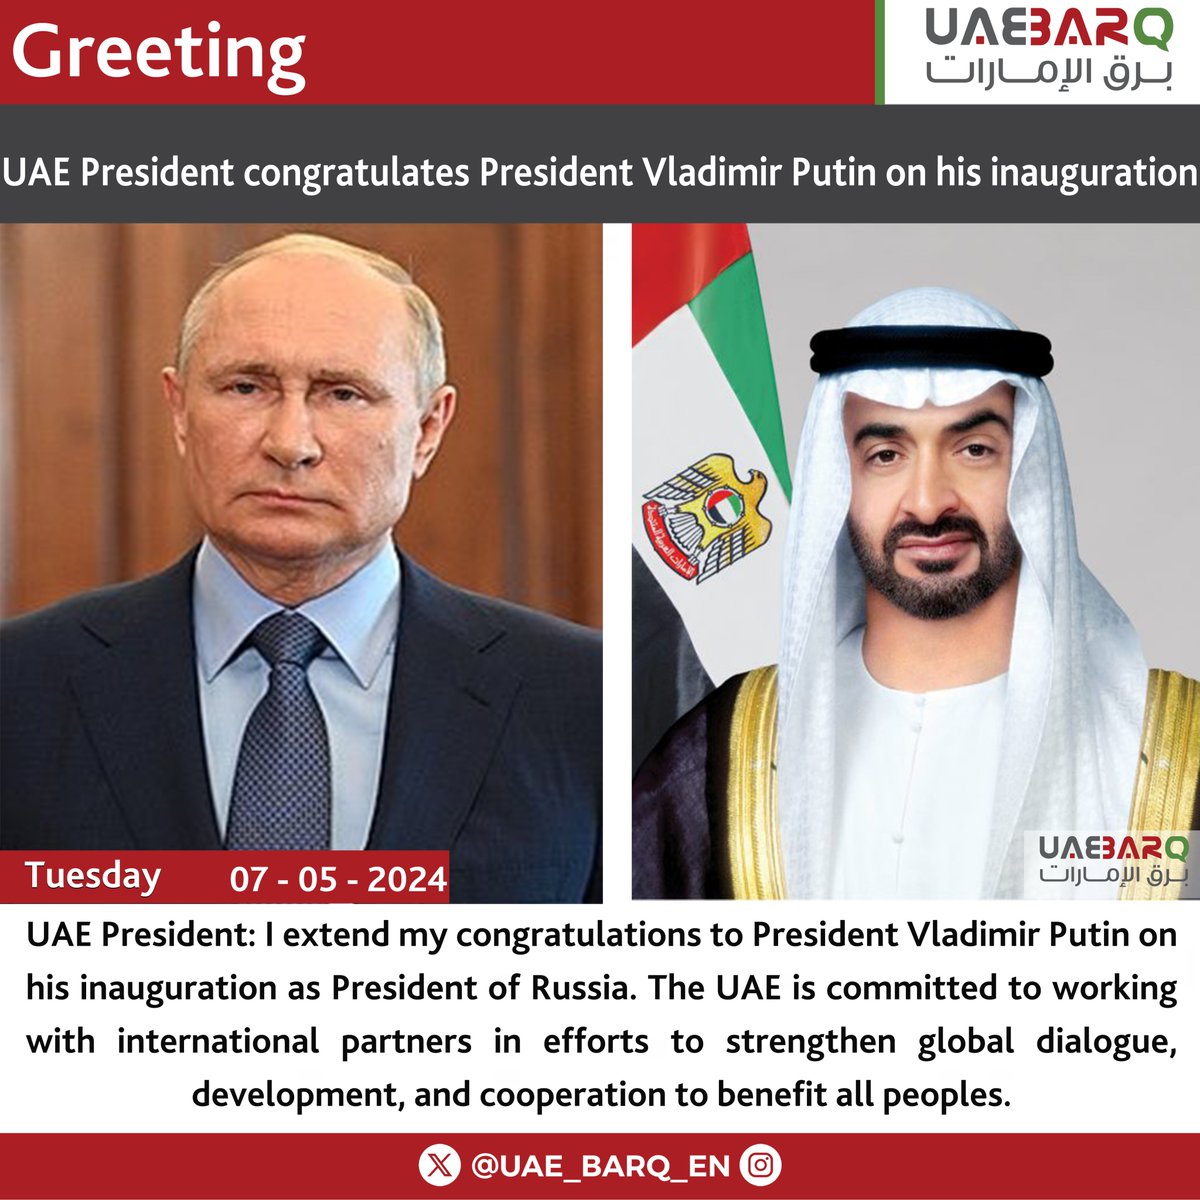 #UAE_President congratulates President Vladimir #Putin on his #inauguration. #UAE_BARQ_EN